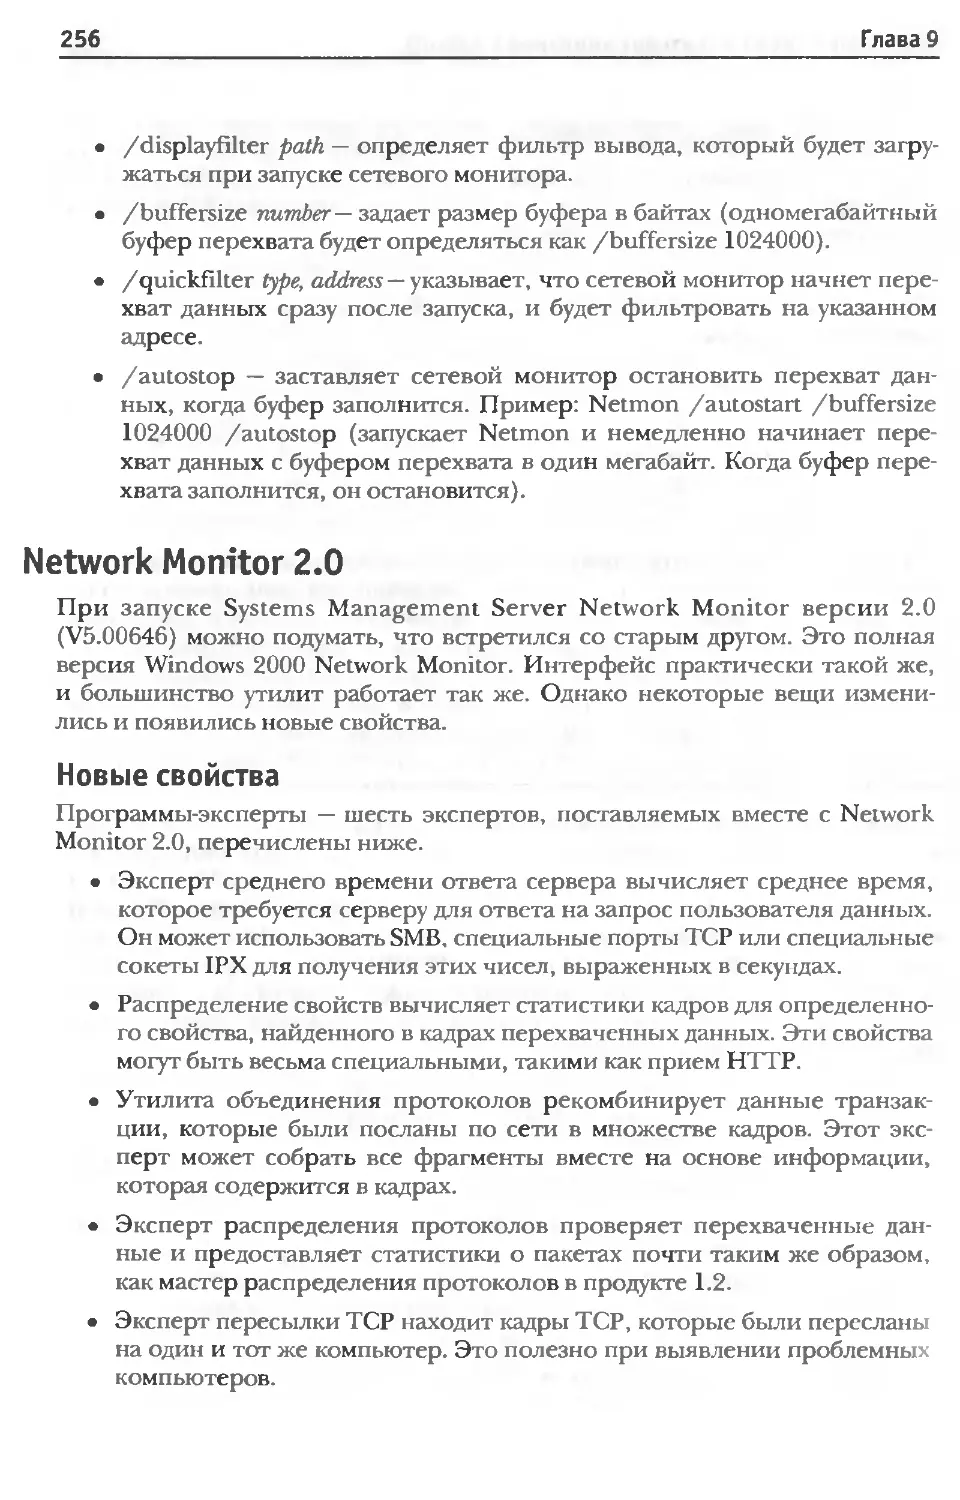 Network Monitor 2.0